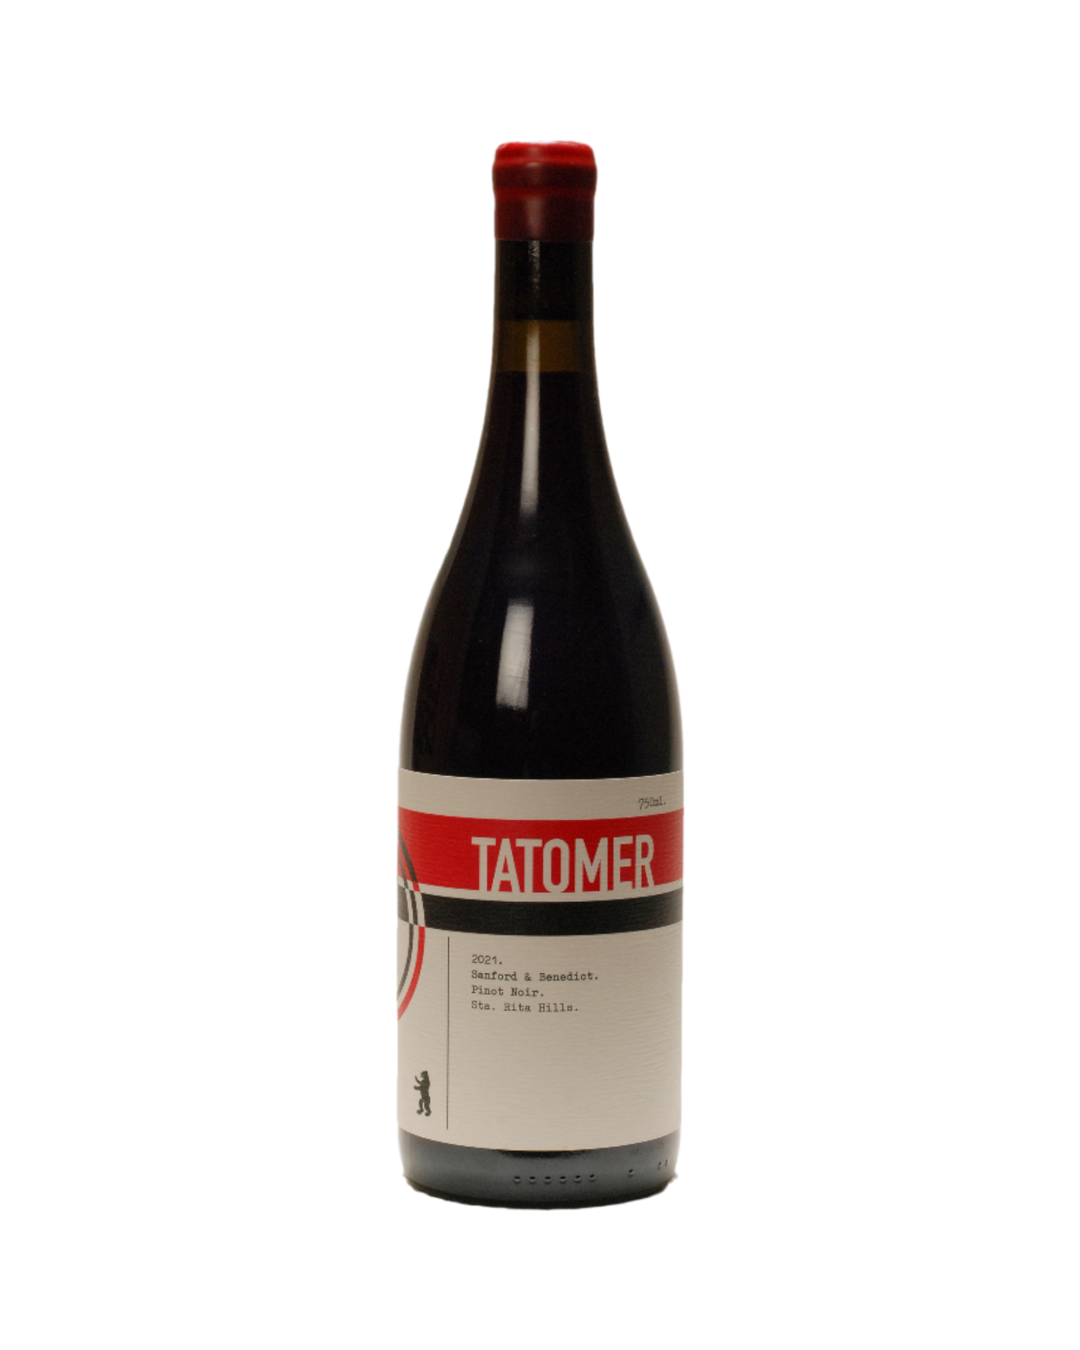 Tatomer Santa Barbara County Pinot Noir